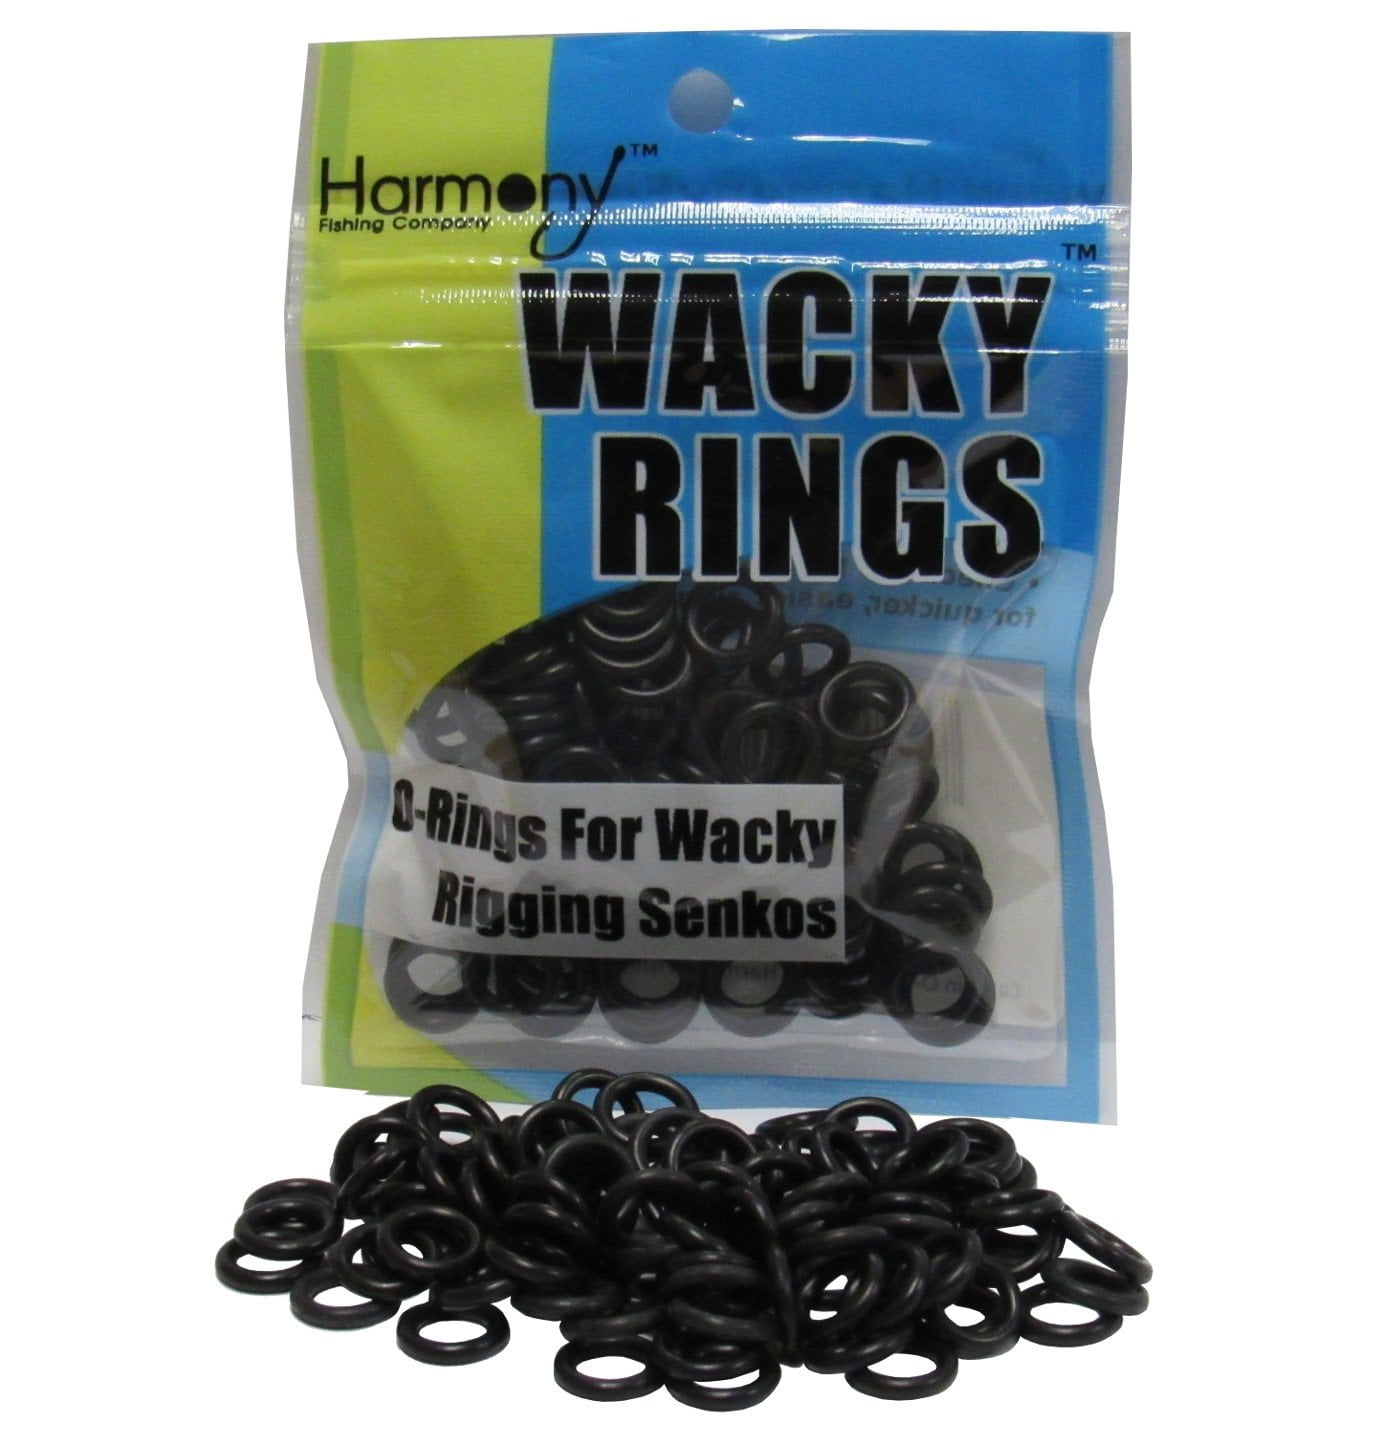 Wacky Rings - O-Rings for Wacky Rigging Senko Worms 100 orings for